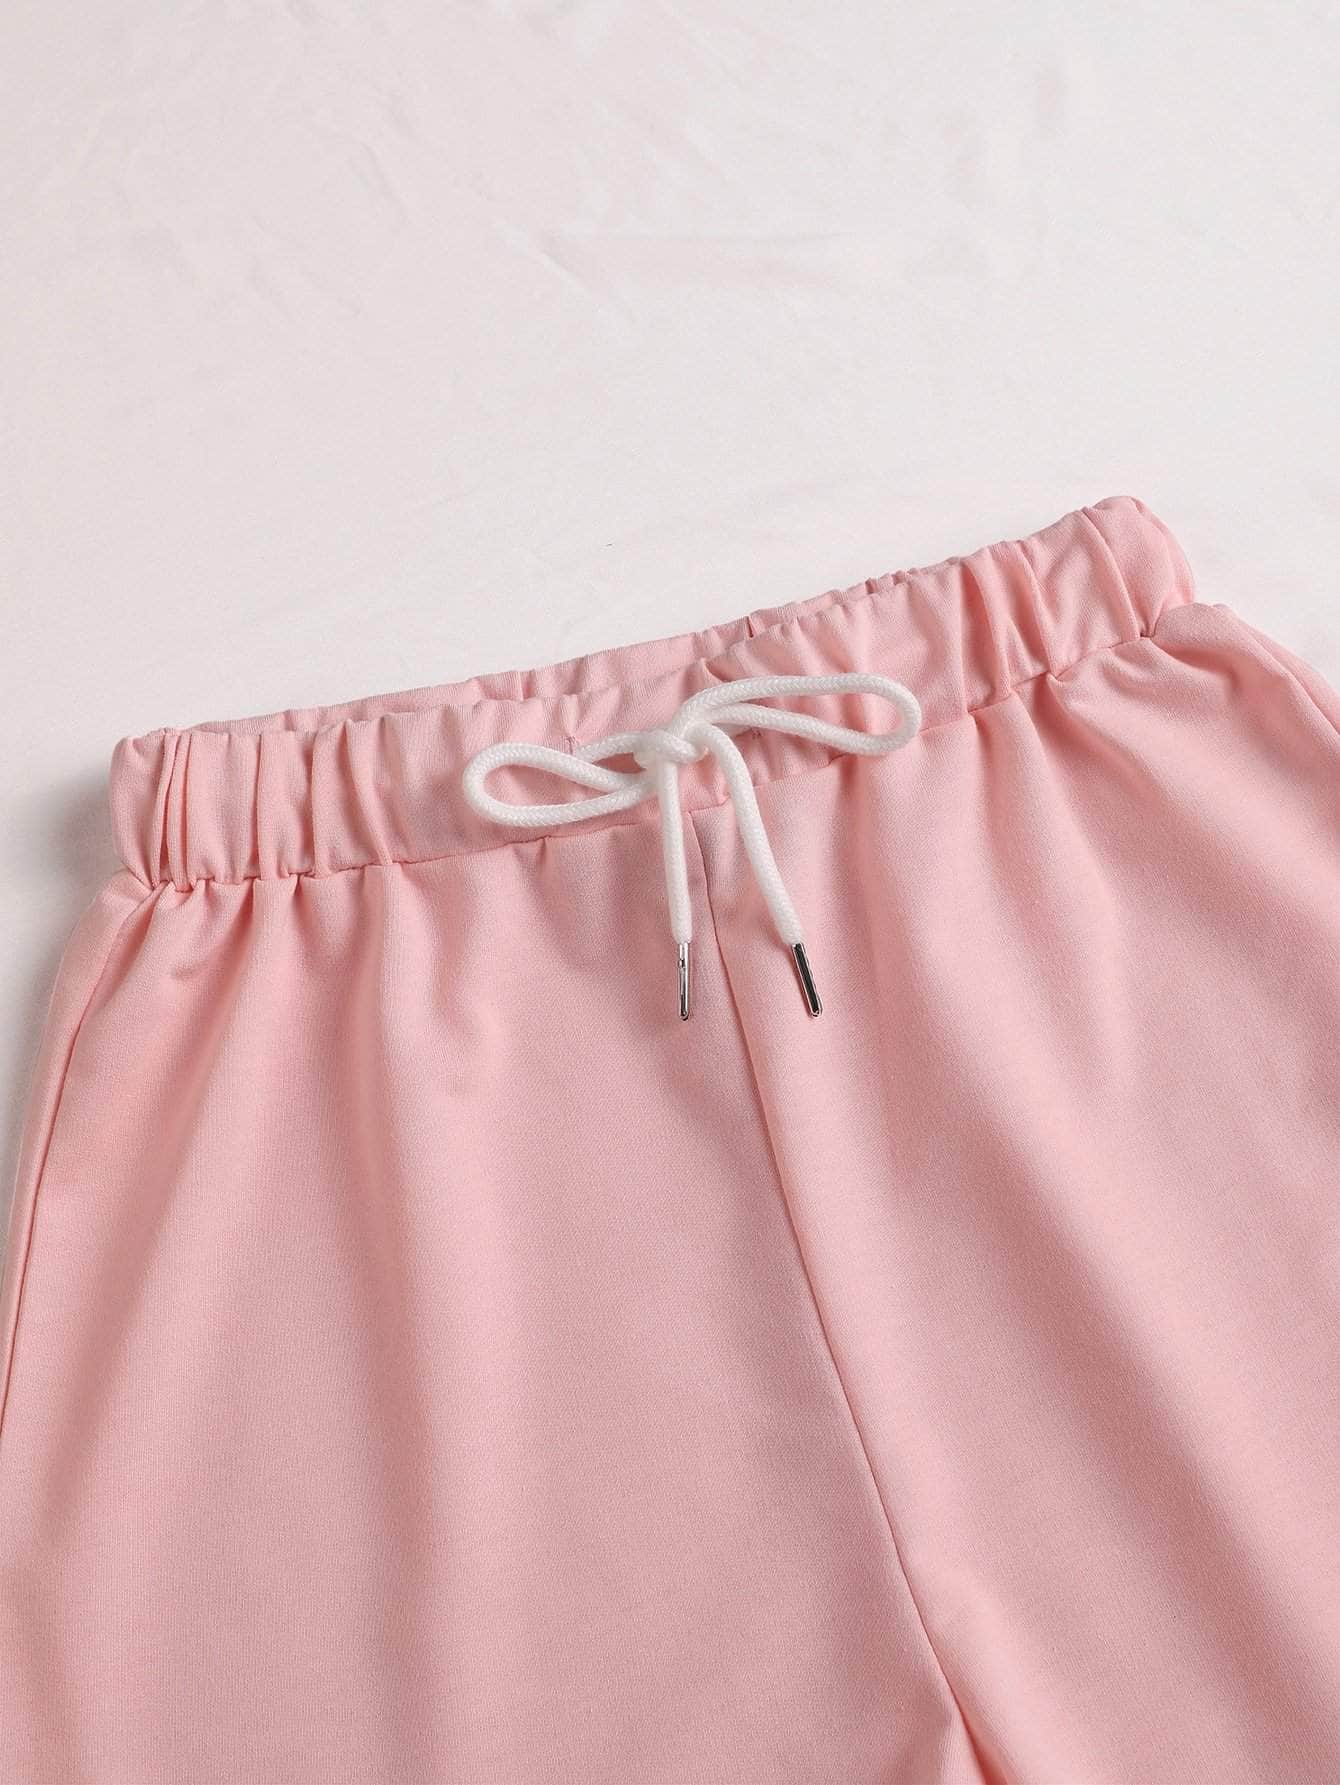 Bebe Rosa / XL Shorts Nudo Liso Casual